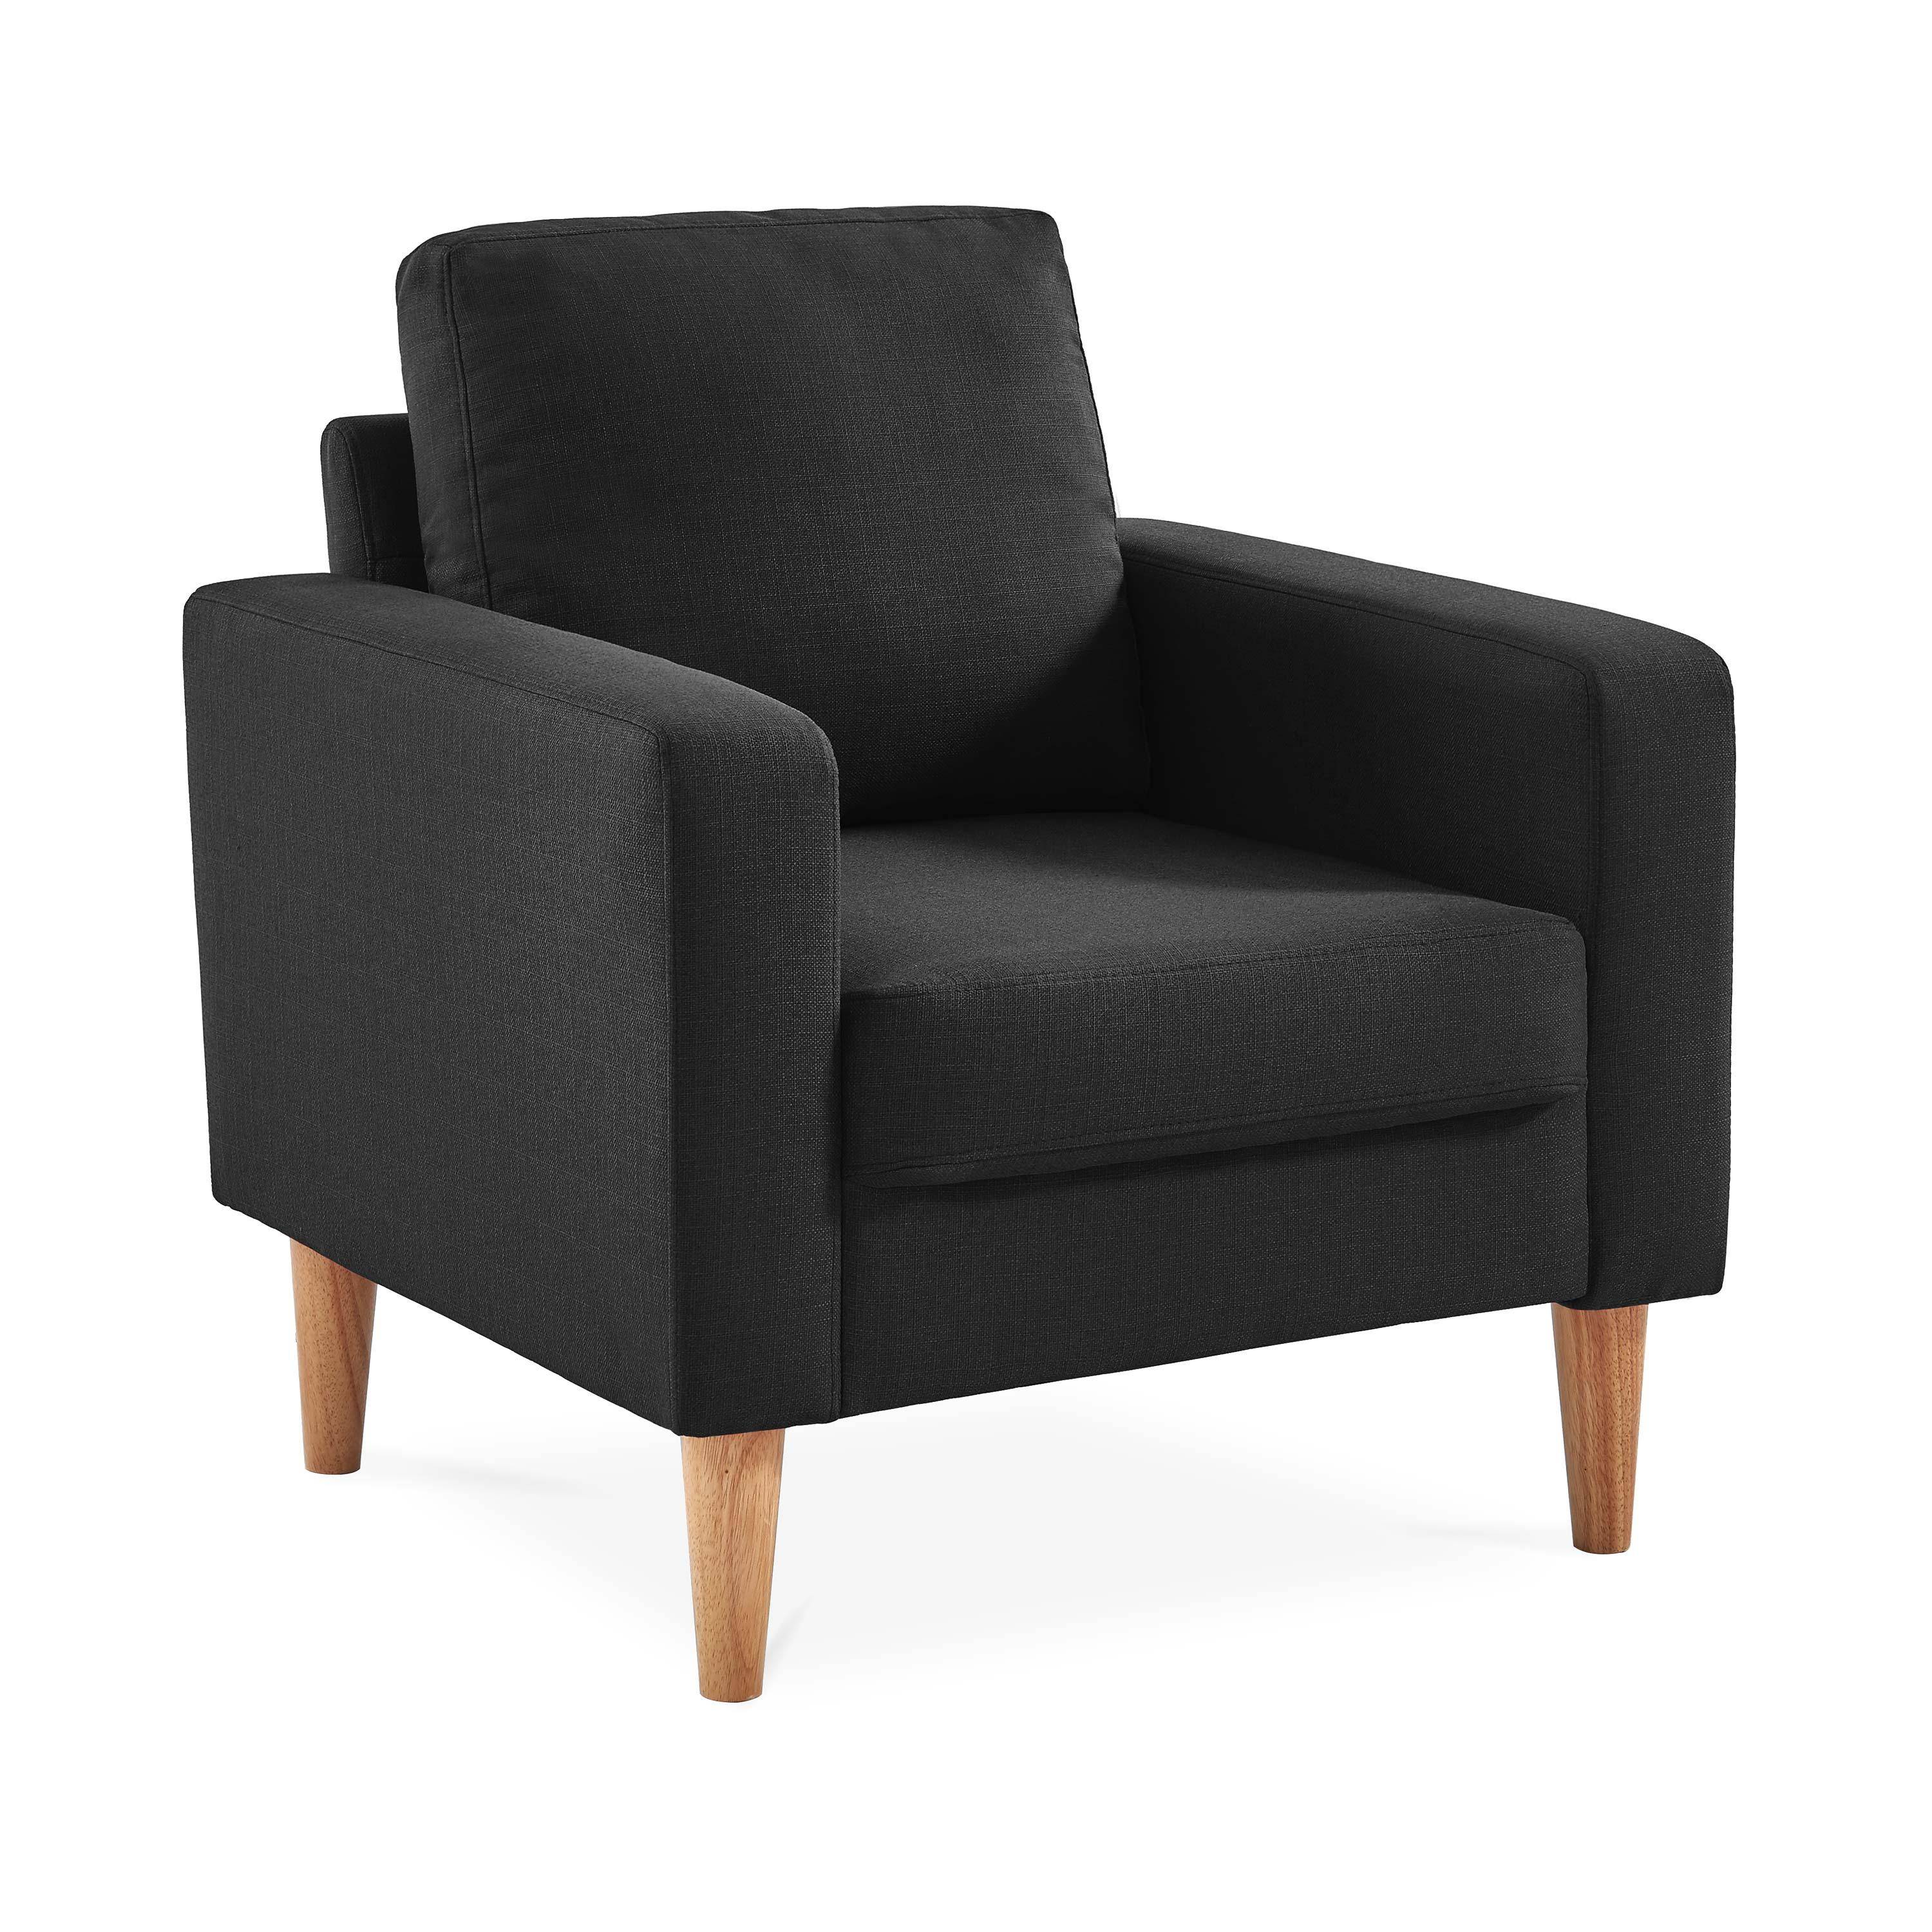 Scandi-style armchair with wooden legs - Bjorn - Dark Grey,sweeek,Photo2